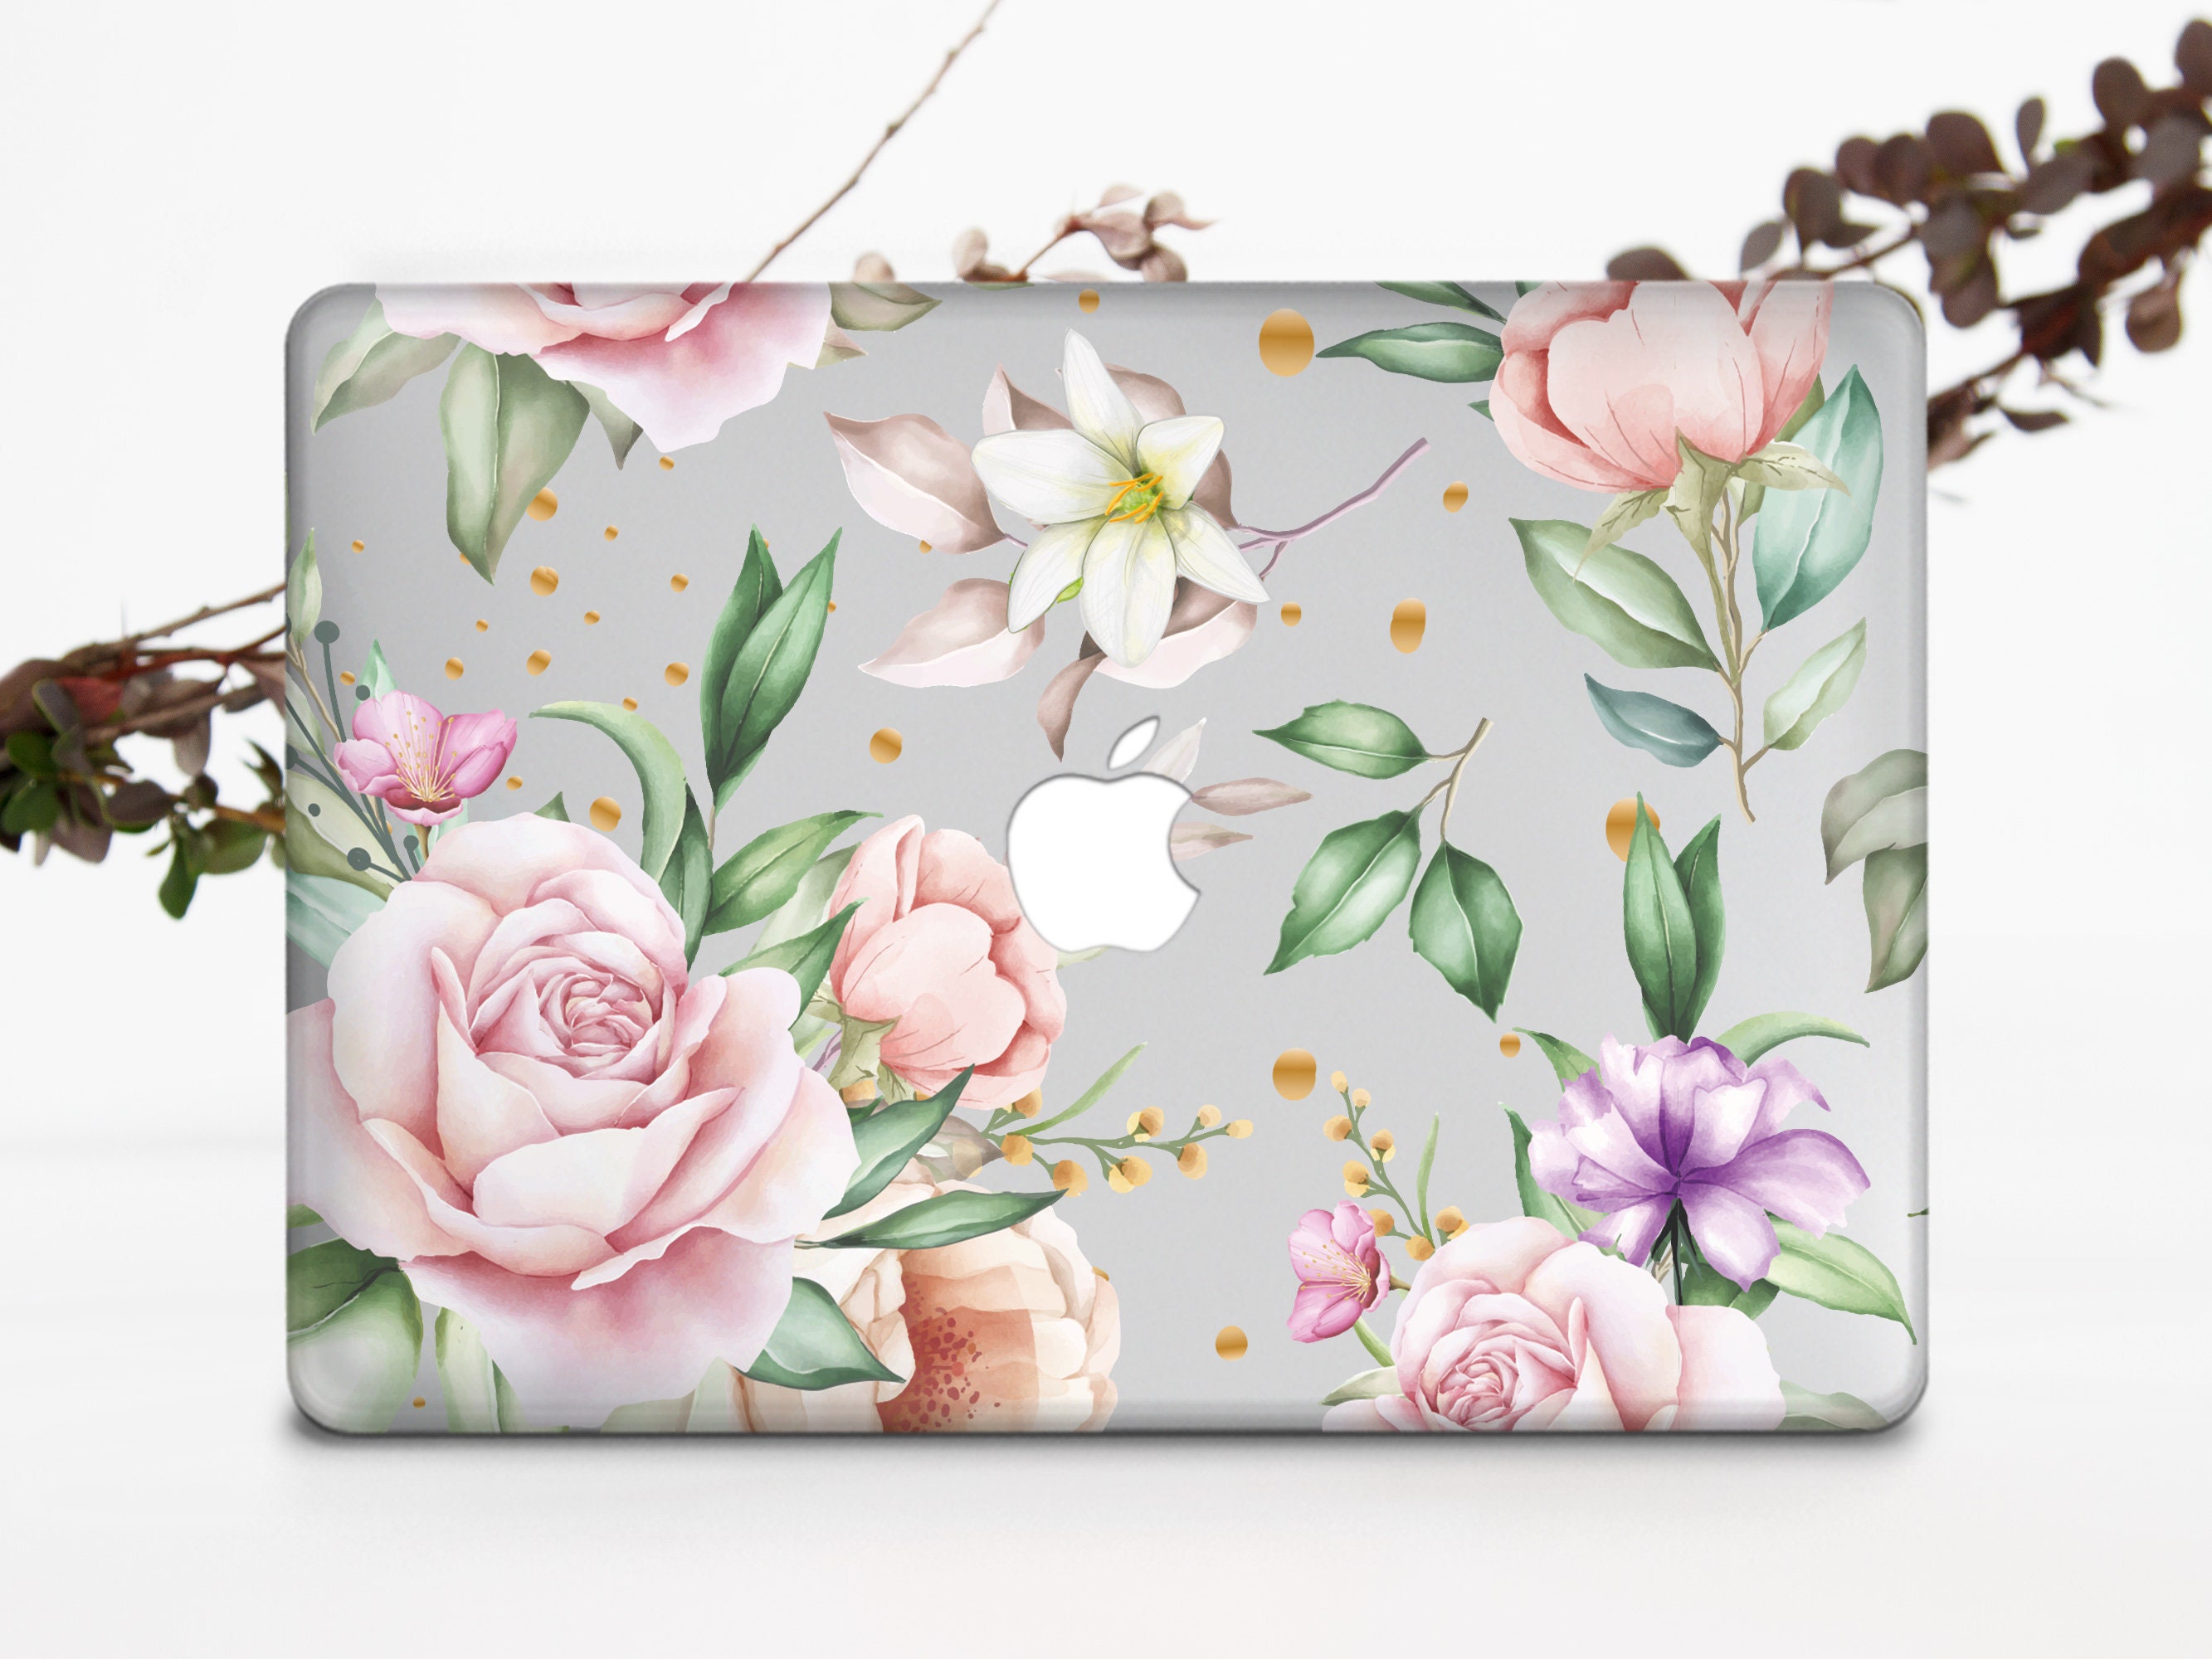 Roses Macbook Air 13 Inch Mother's Day Gift Macbook Pro 15 Hard 2019 Leaf Macbook Air 11 Clear Case Floral Macbook Retina 13 Cover  DE0032